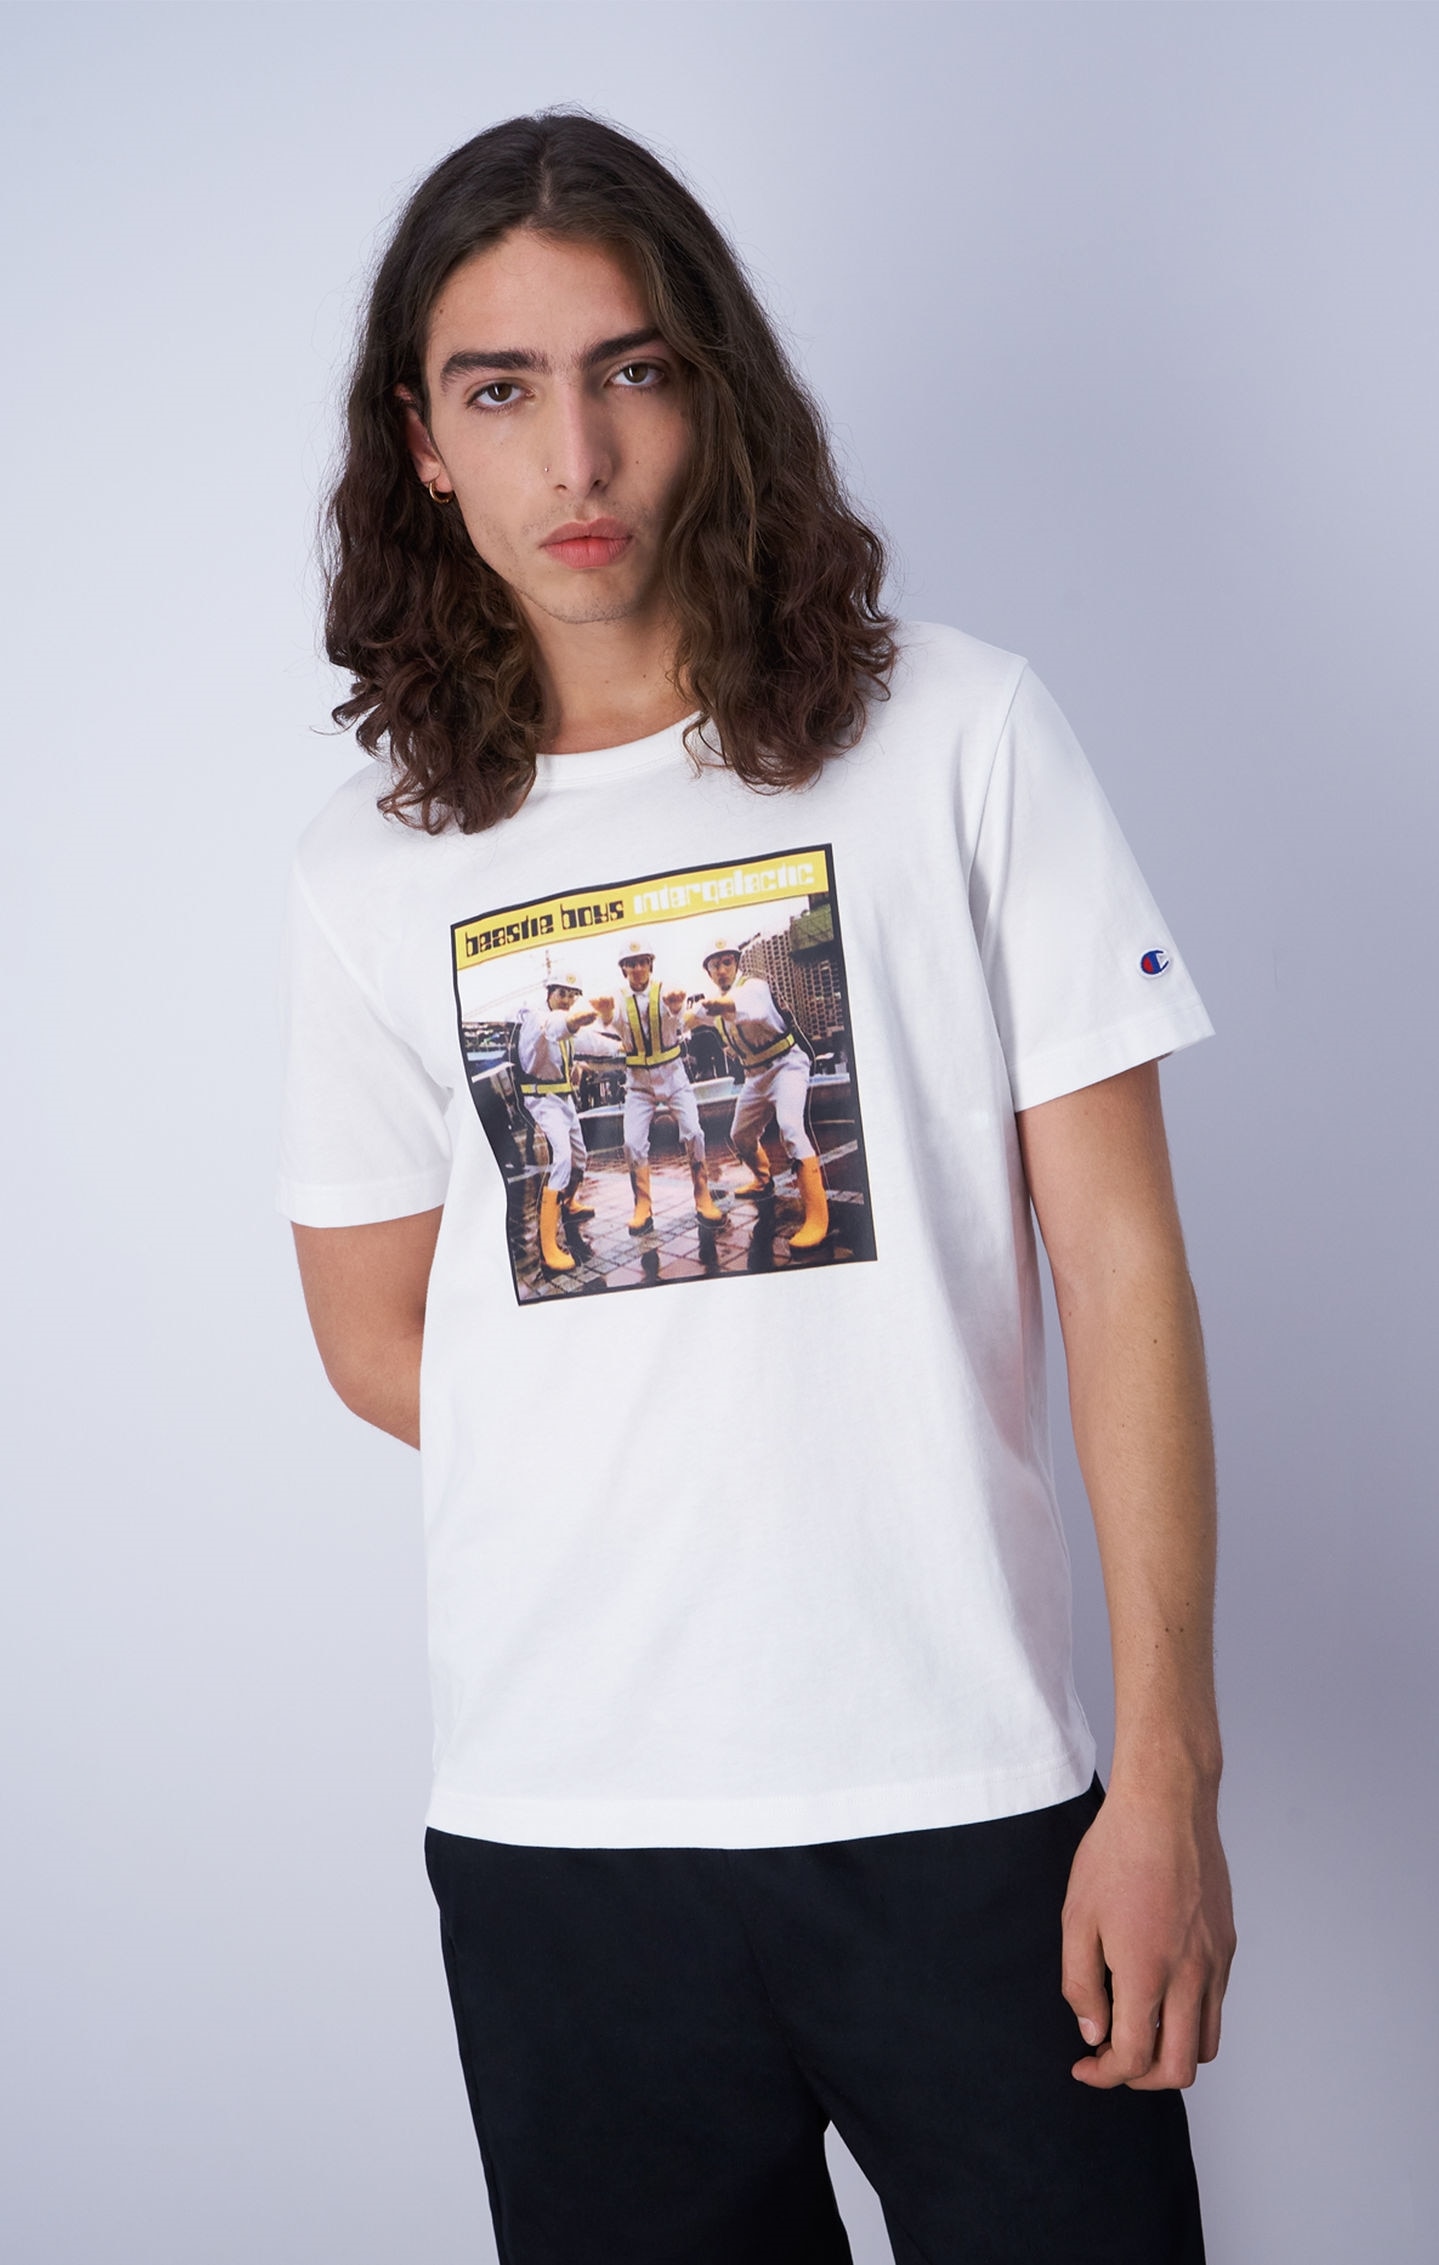 T-shirt photo Champion x Beastie Boys